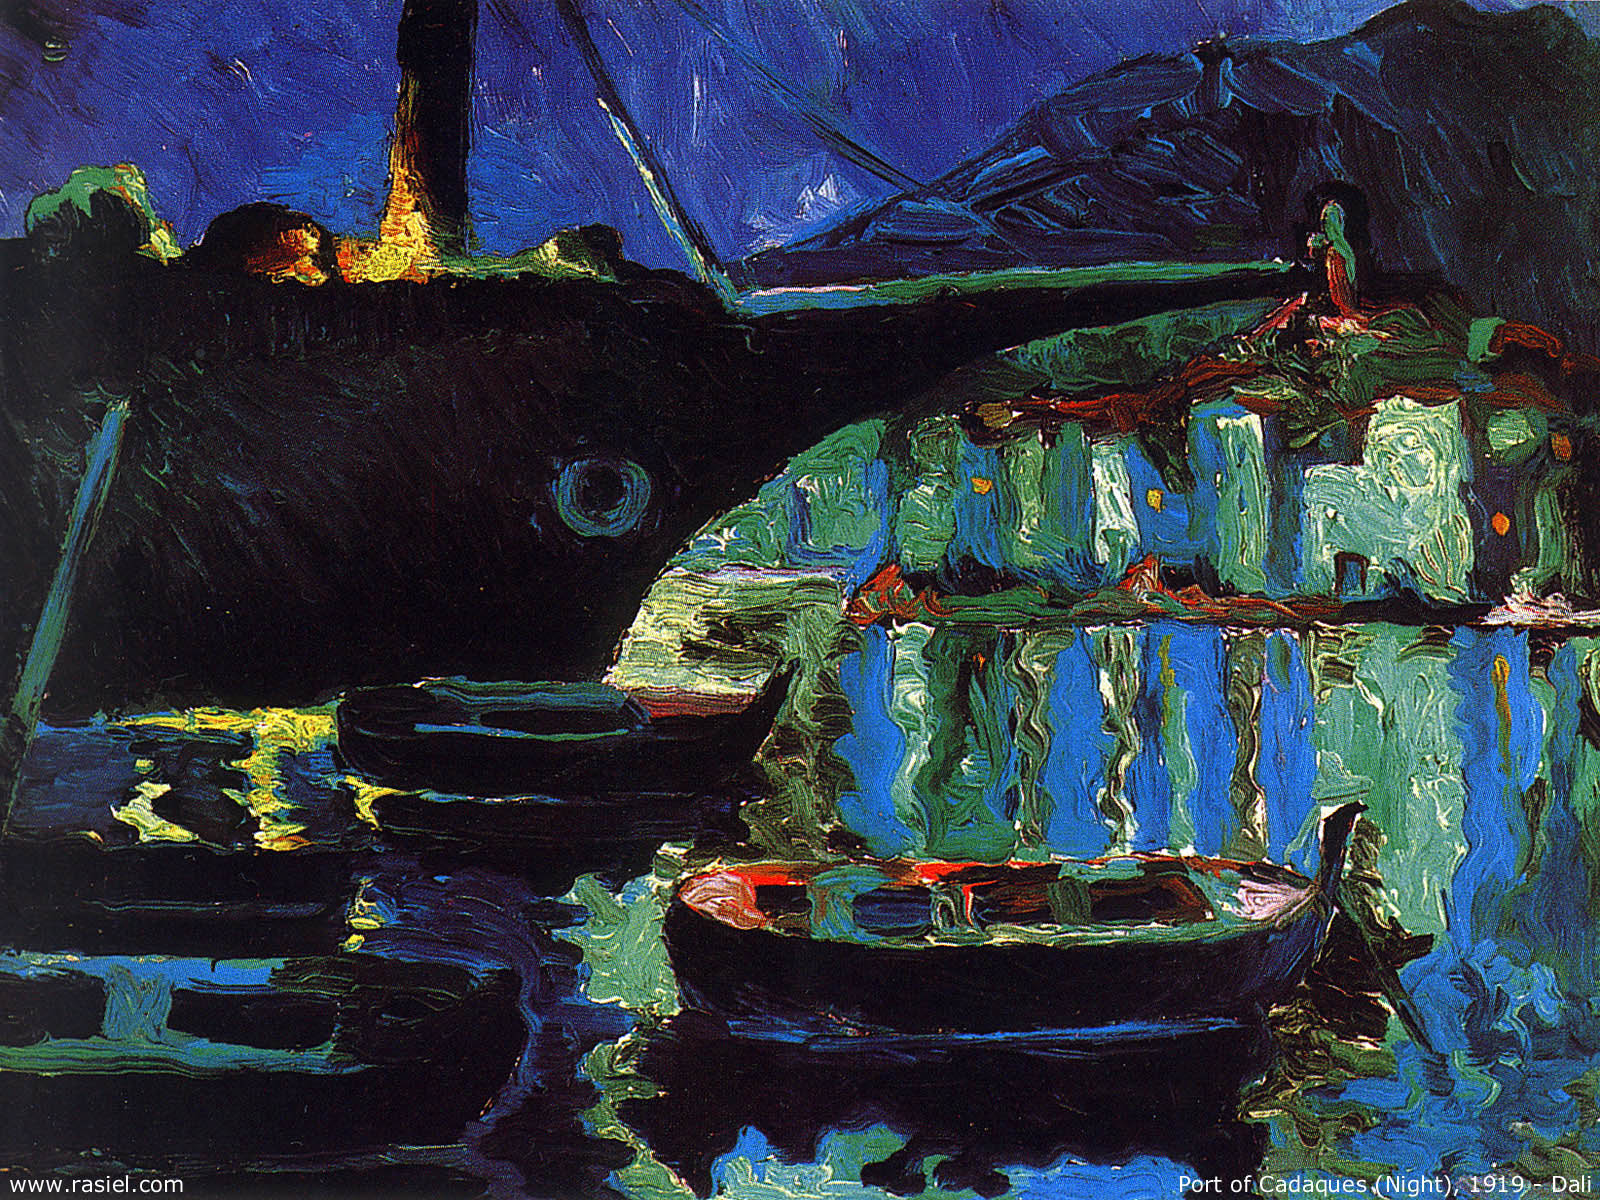 Port of Cadaques (Night) (1918).